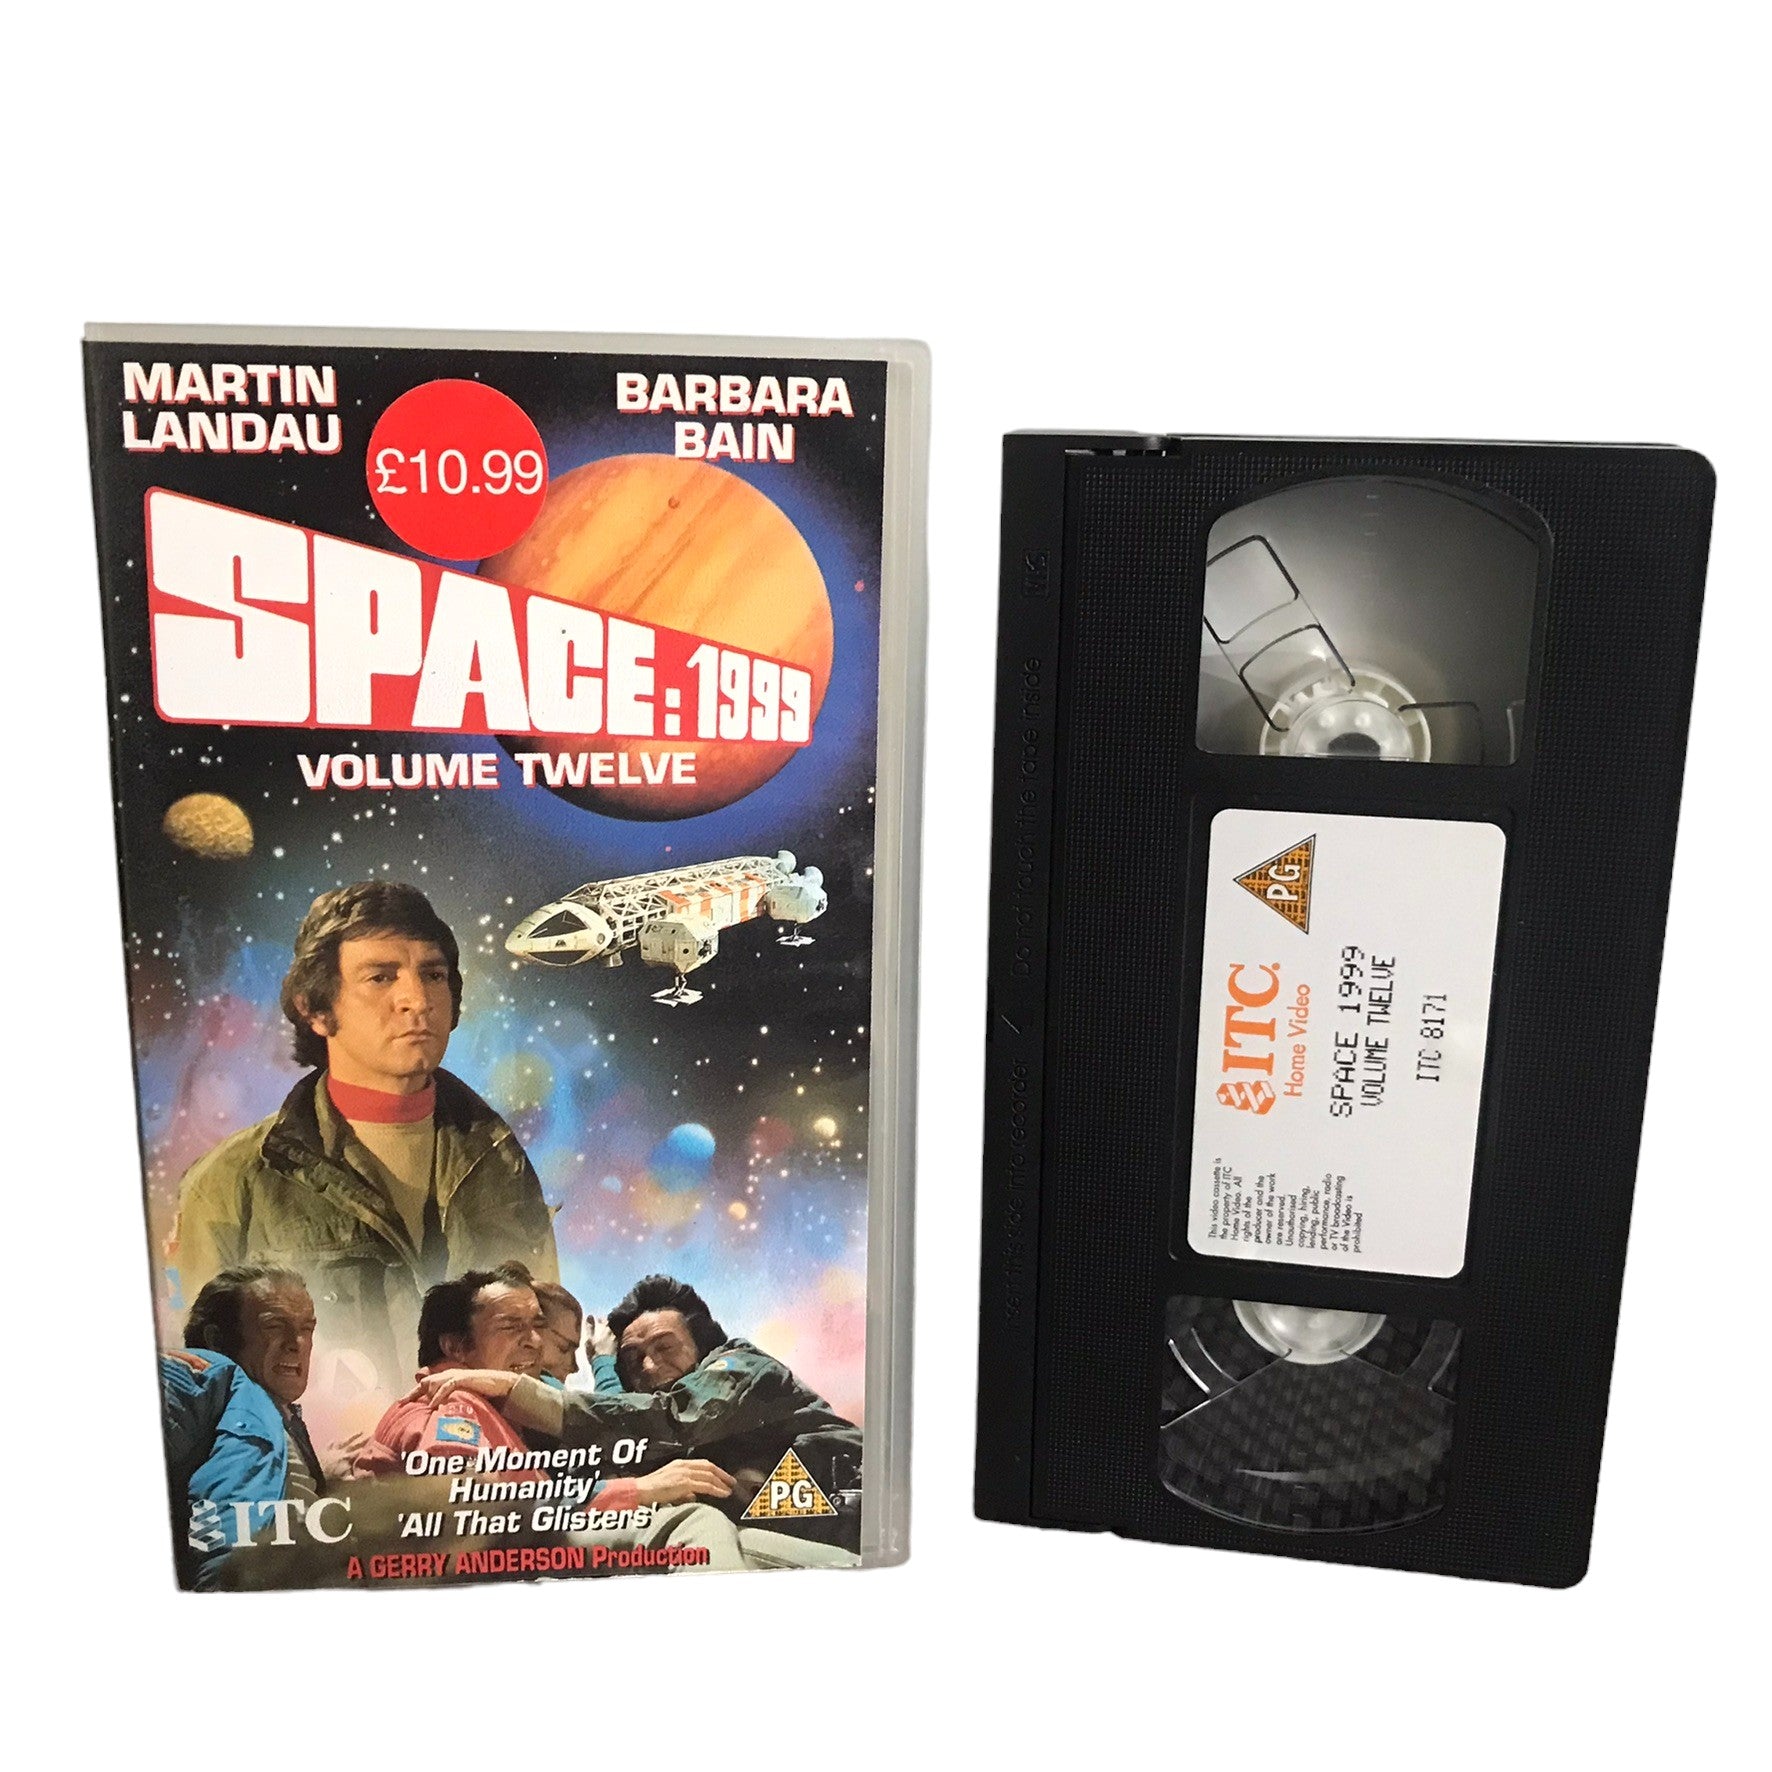 Space : 1999 - Volume 12 - Martin Landau, Barbara Bain - ITC - Sci-Fi - Pal - VHS-